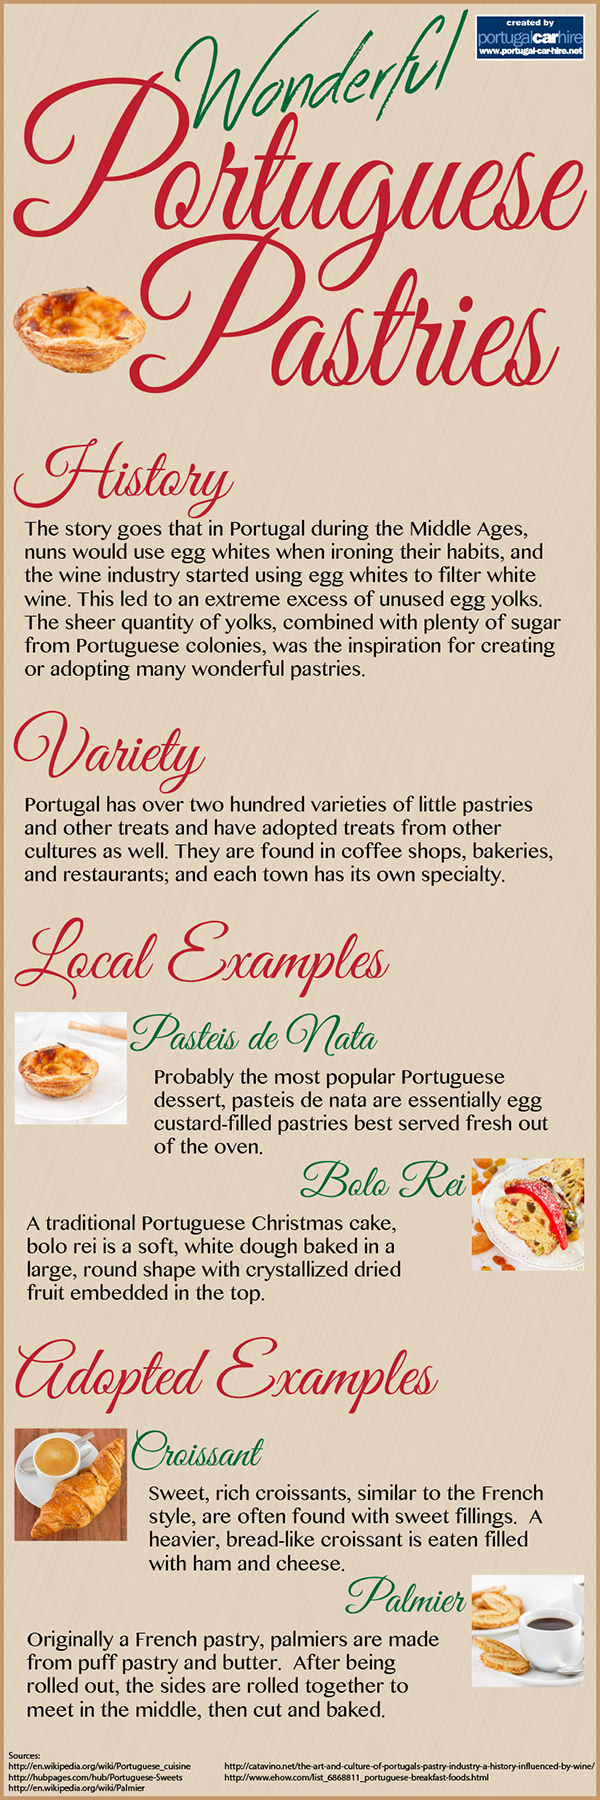 Wonderful-Portuguese-Pastries (1)